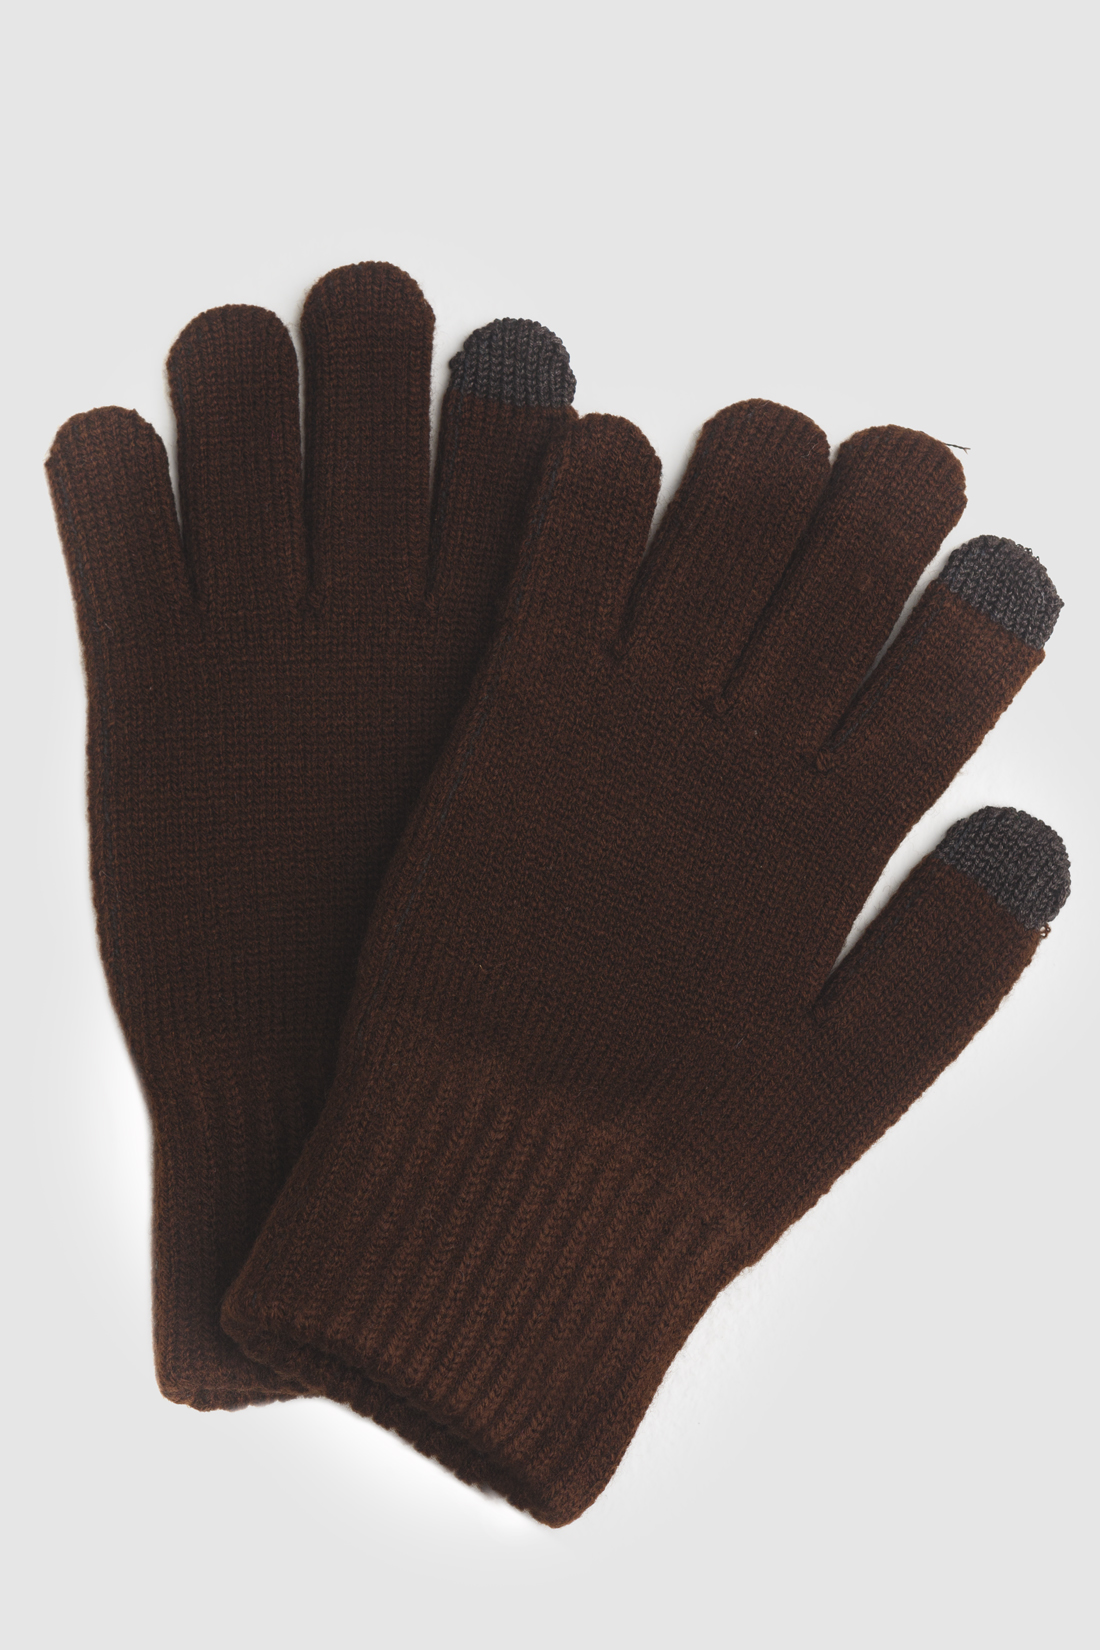 Перчатки (арт. baon B360526), размер Без/раз, цвет коричневый Перчатки (арт. baon B360526) - фото 1